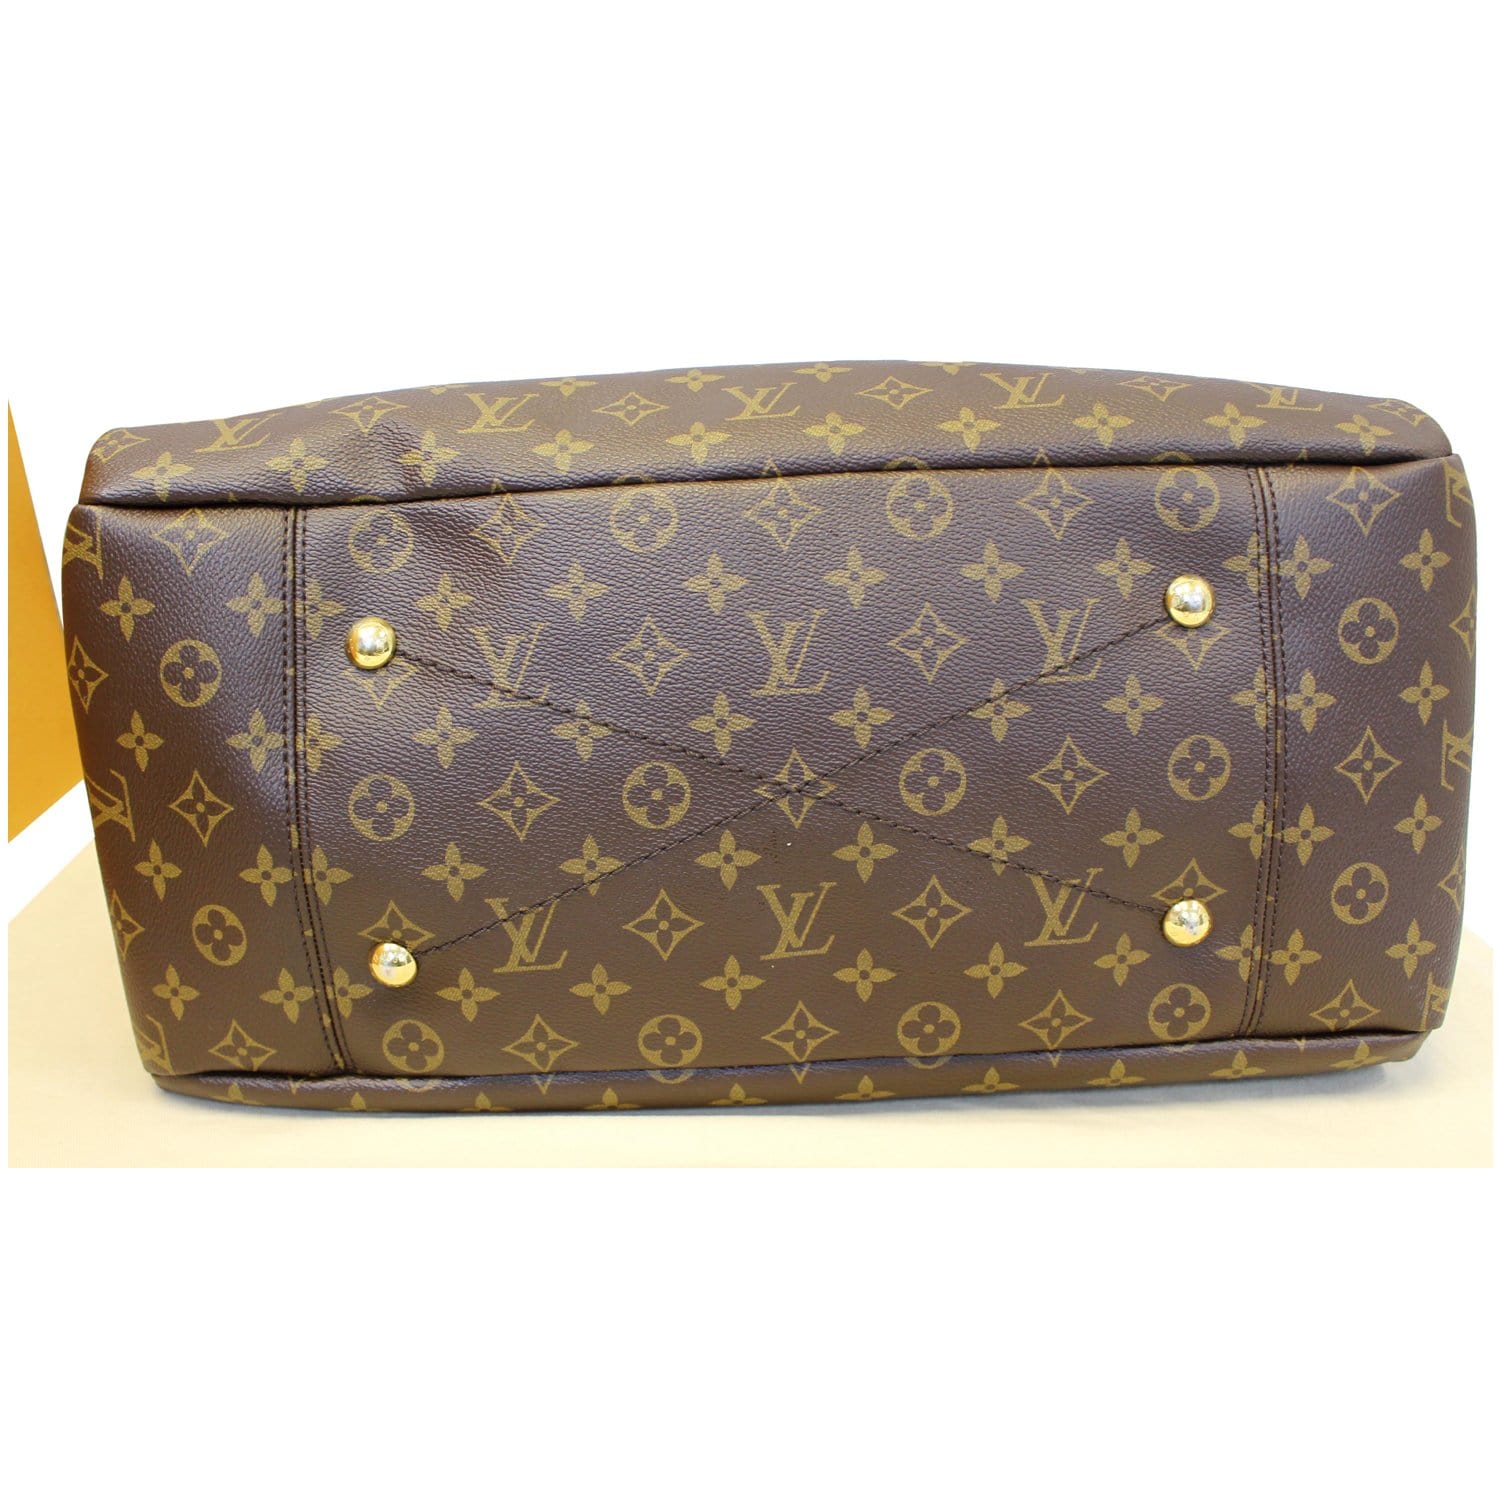 ❤️‍🩹SOLD❤️‍🩹 Louis Vuitton Artsy MM Monogram Shoulder Bag